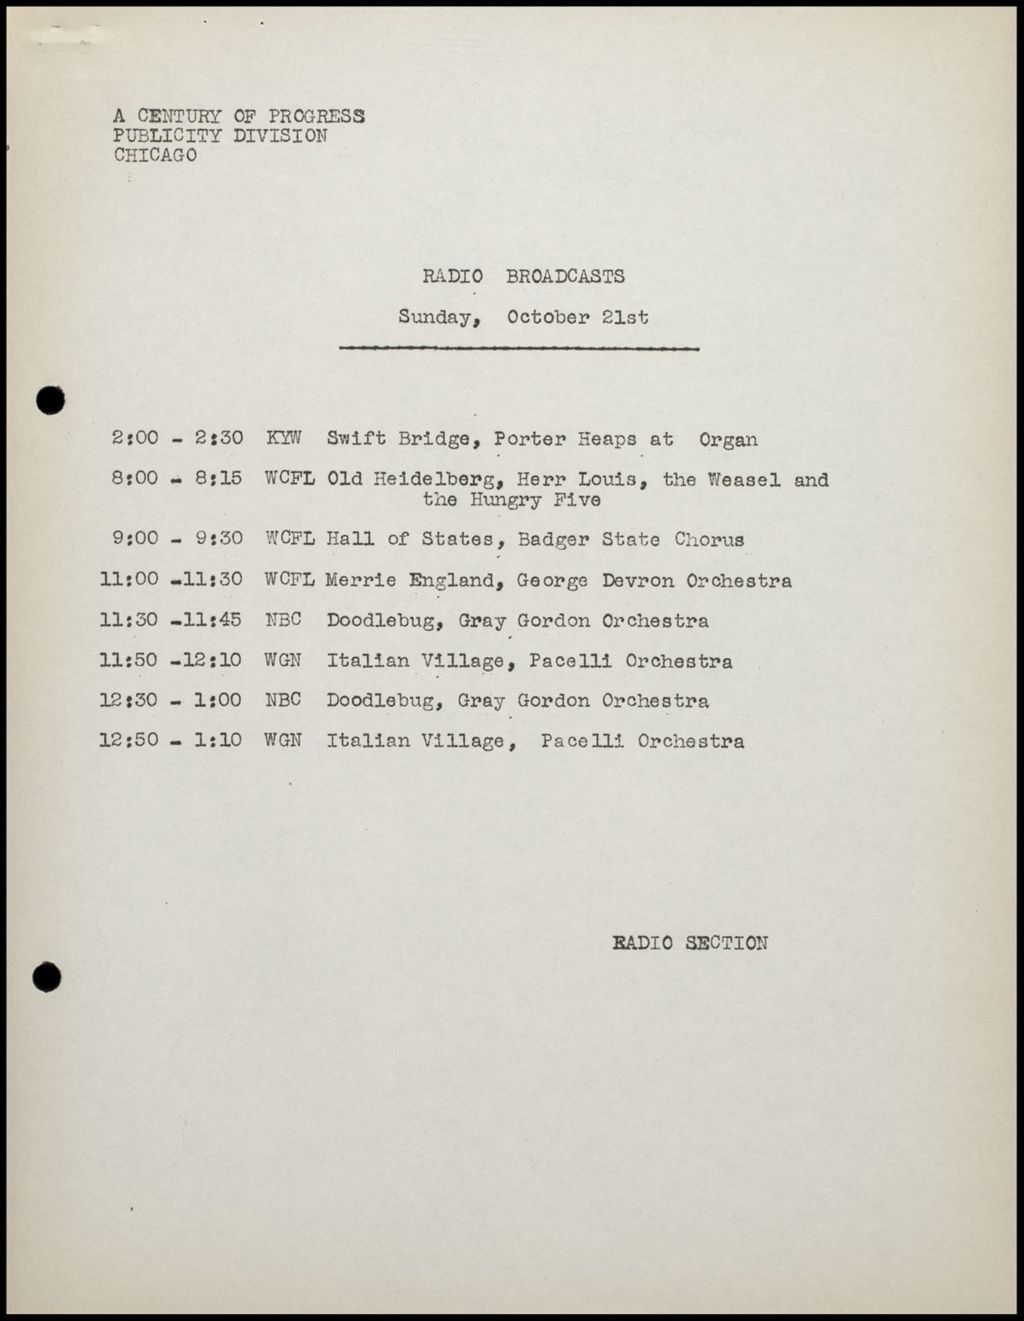 Miniature of Promotion Stories, October 1934 (Folder 14-129)